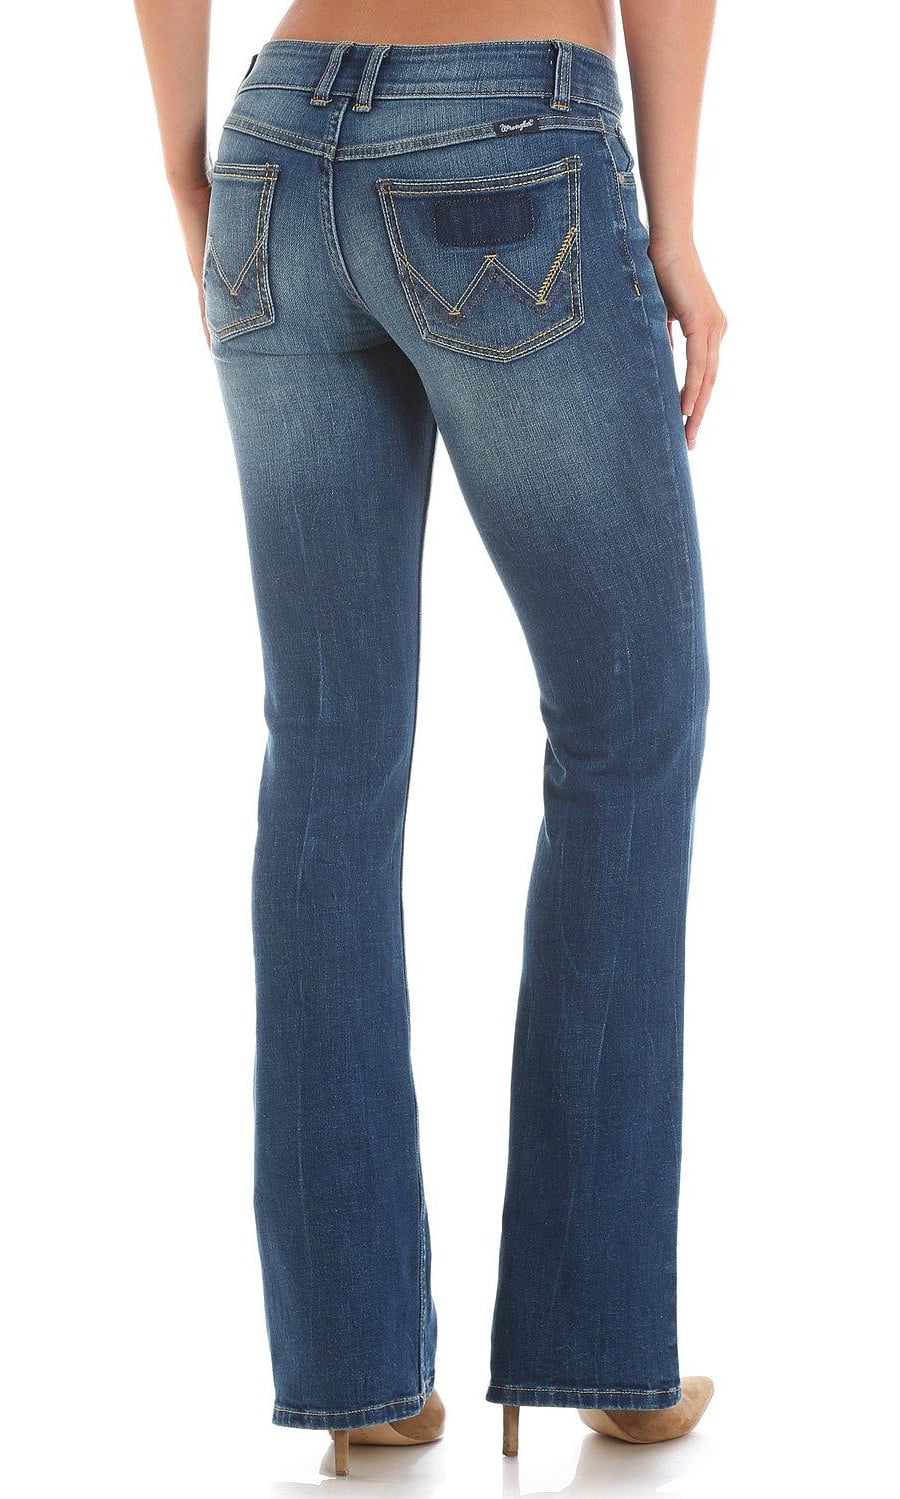 Wrangler Women's Indigo Retro Sadie Jeans Boot Cut - 07Mwzmd 